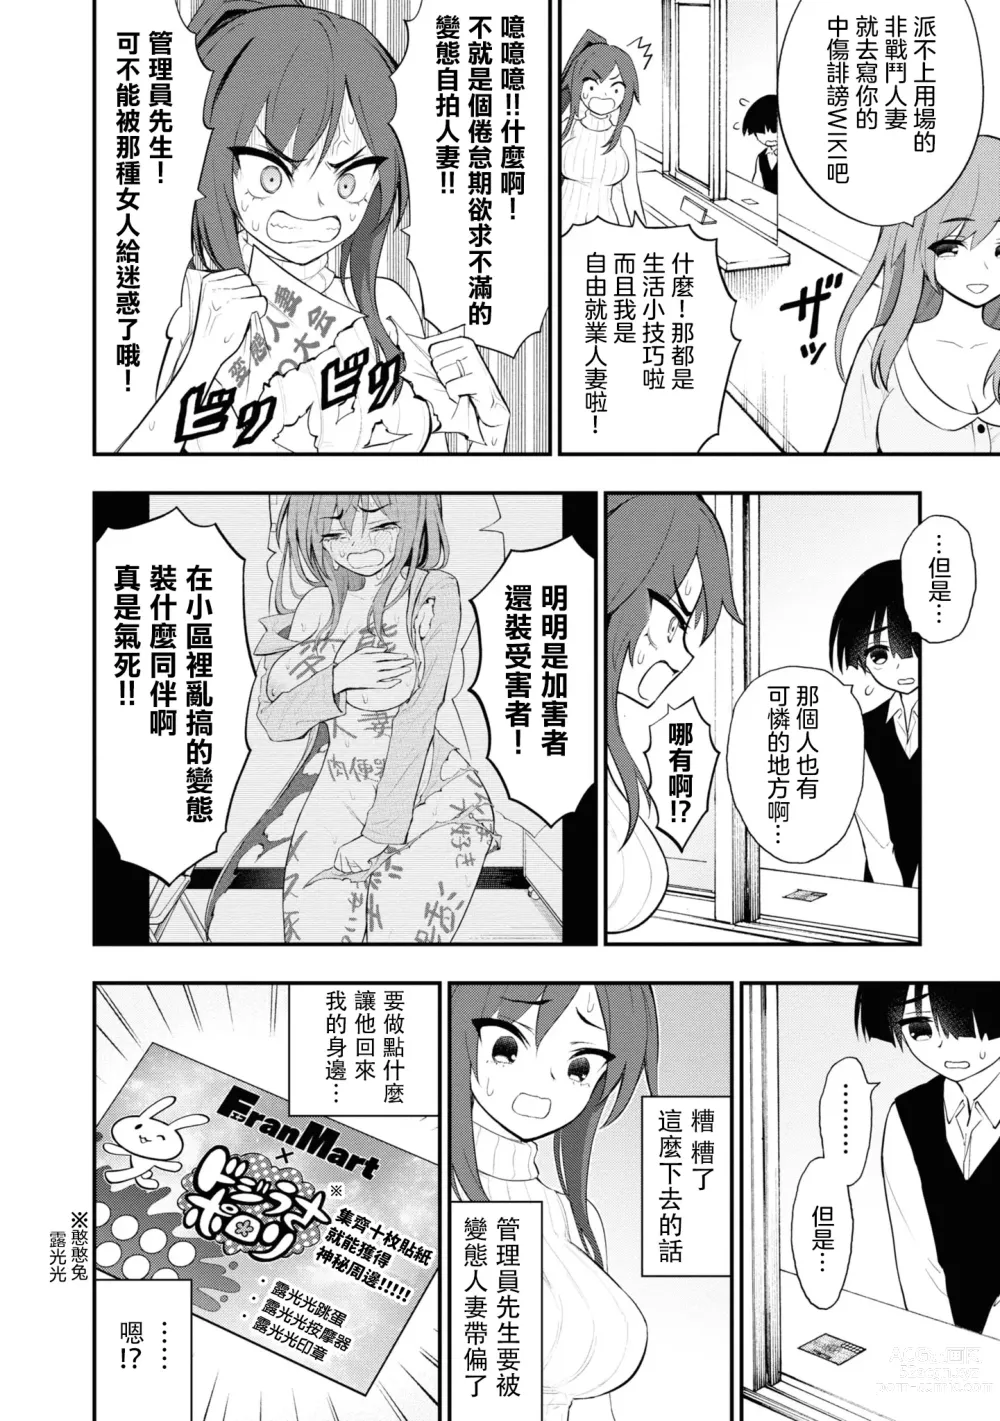 Page 2 of manga 淫獄小區 15-17話